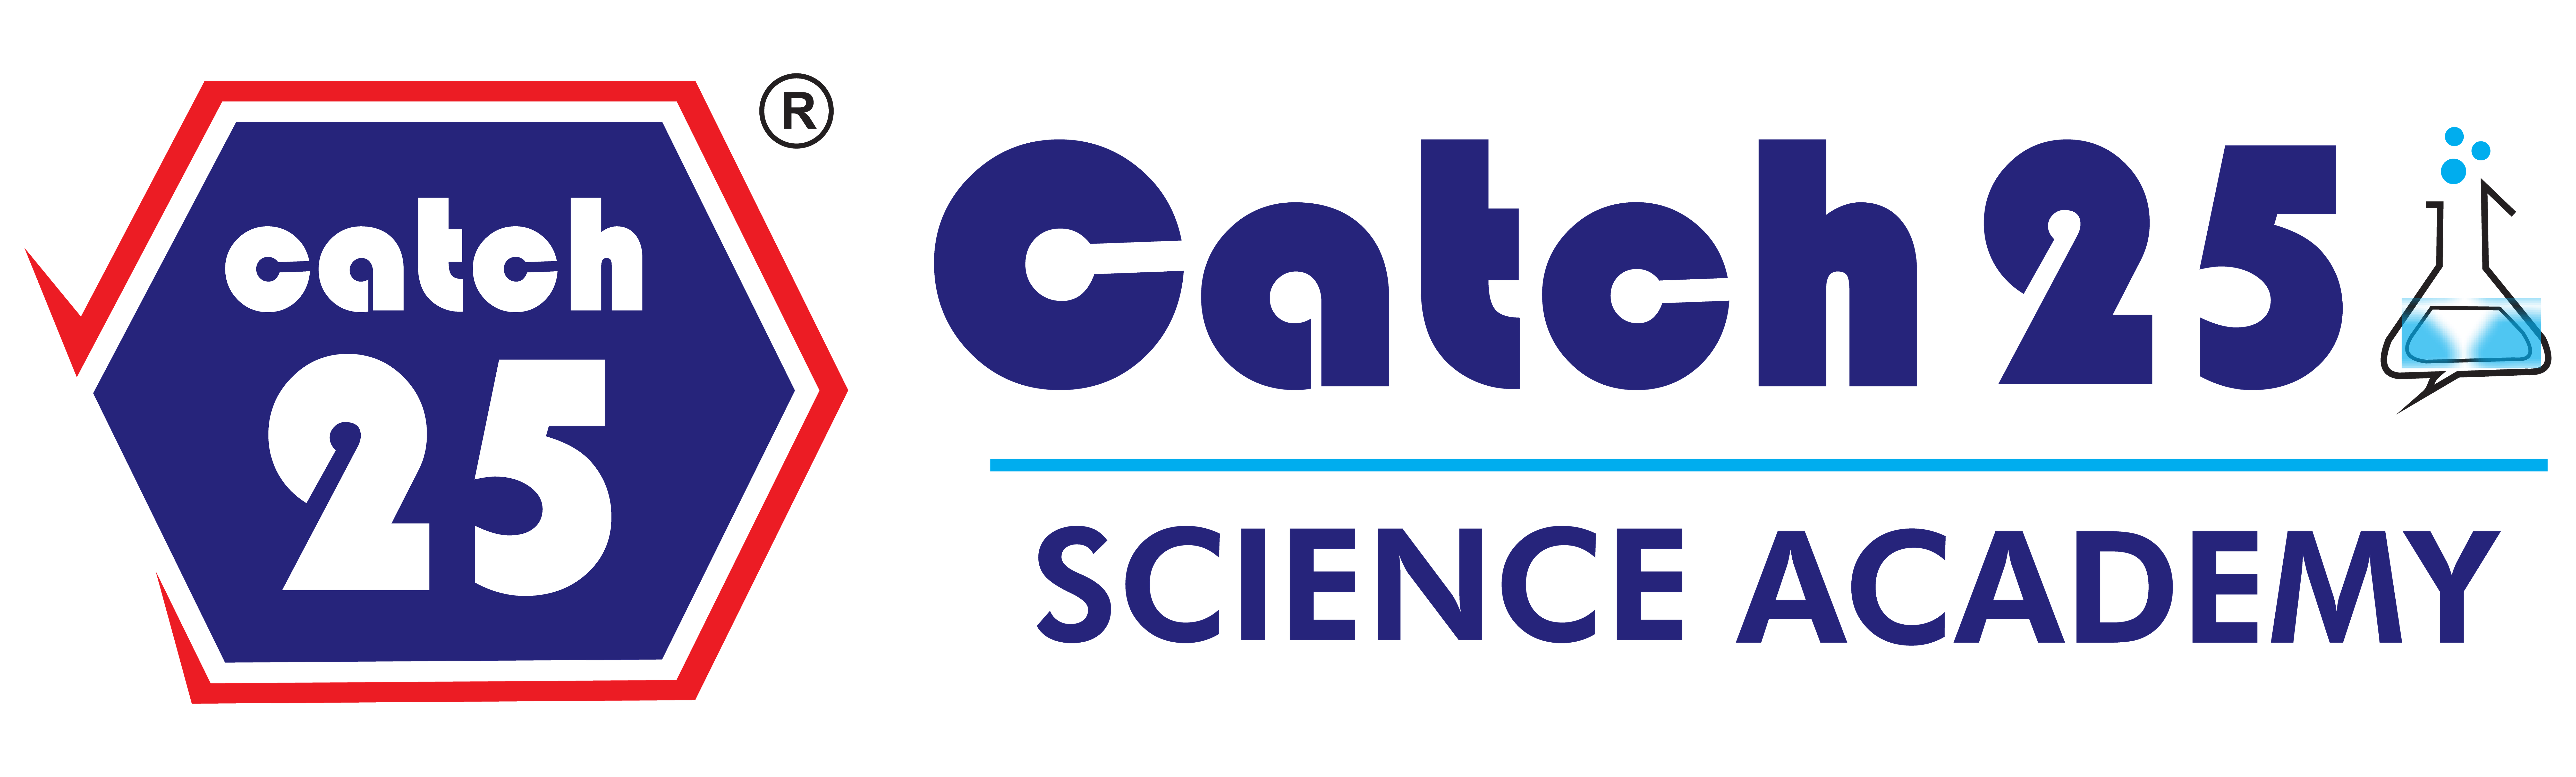 Catch 25 Science Academy